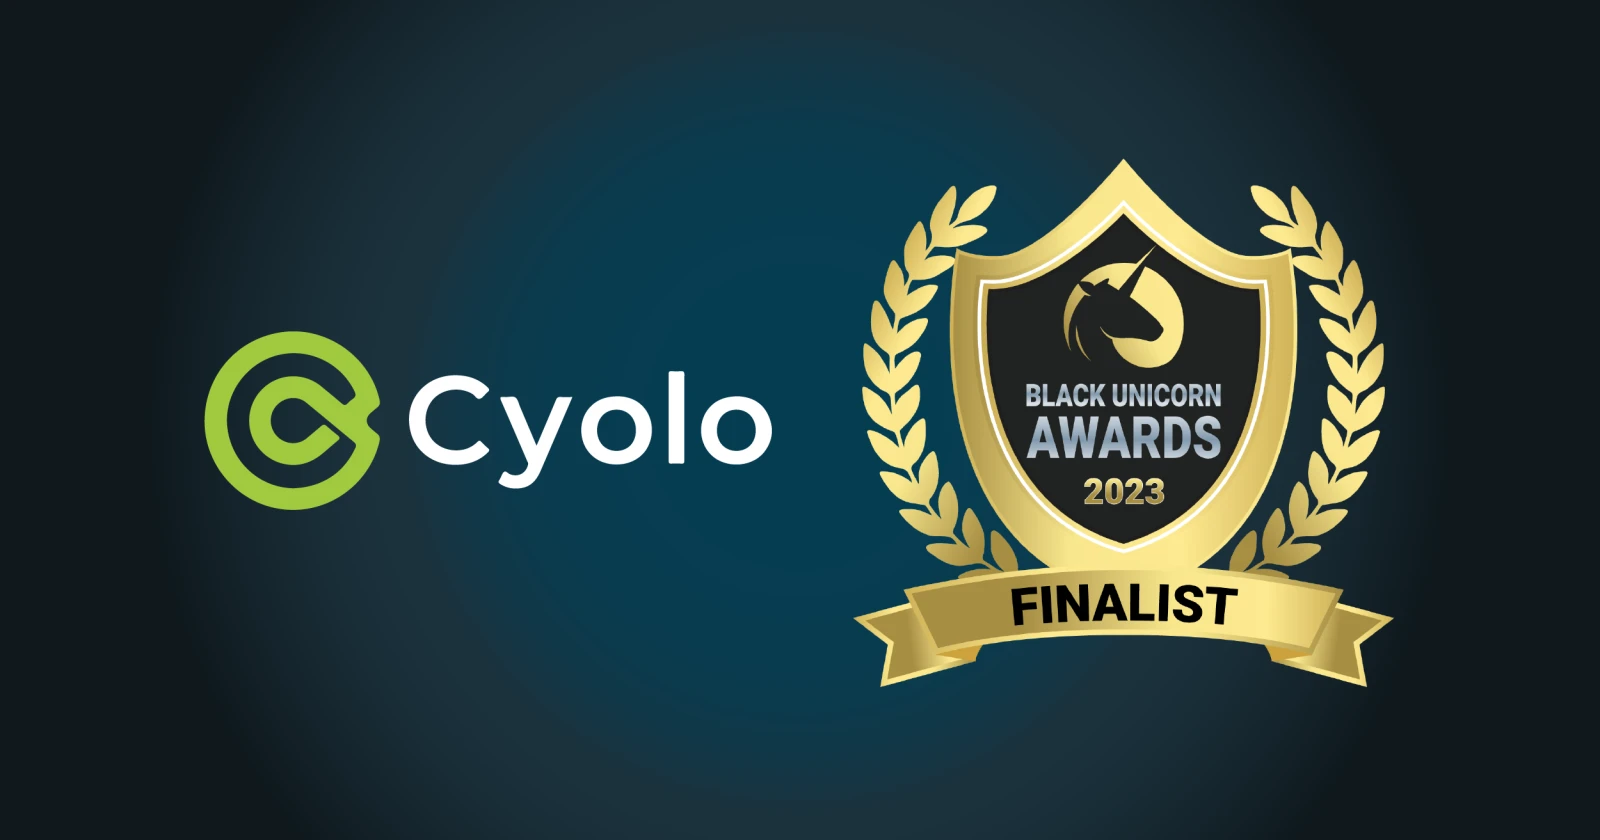 Cyolo Named a Finalist in the Prestigious Black Unicorn Awards for 2023